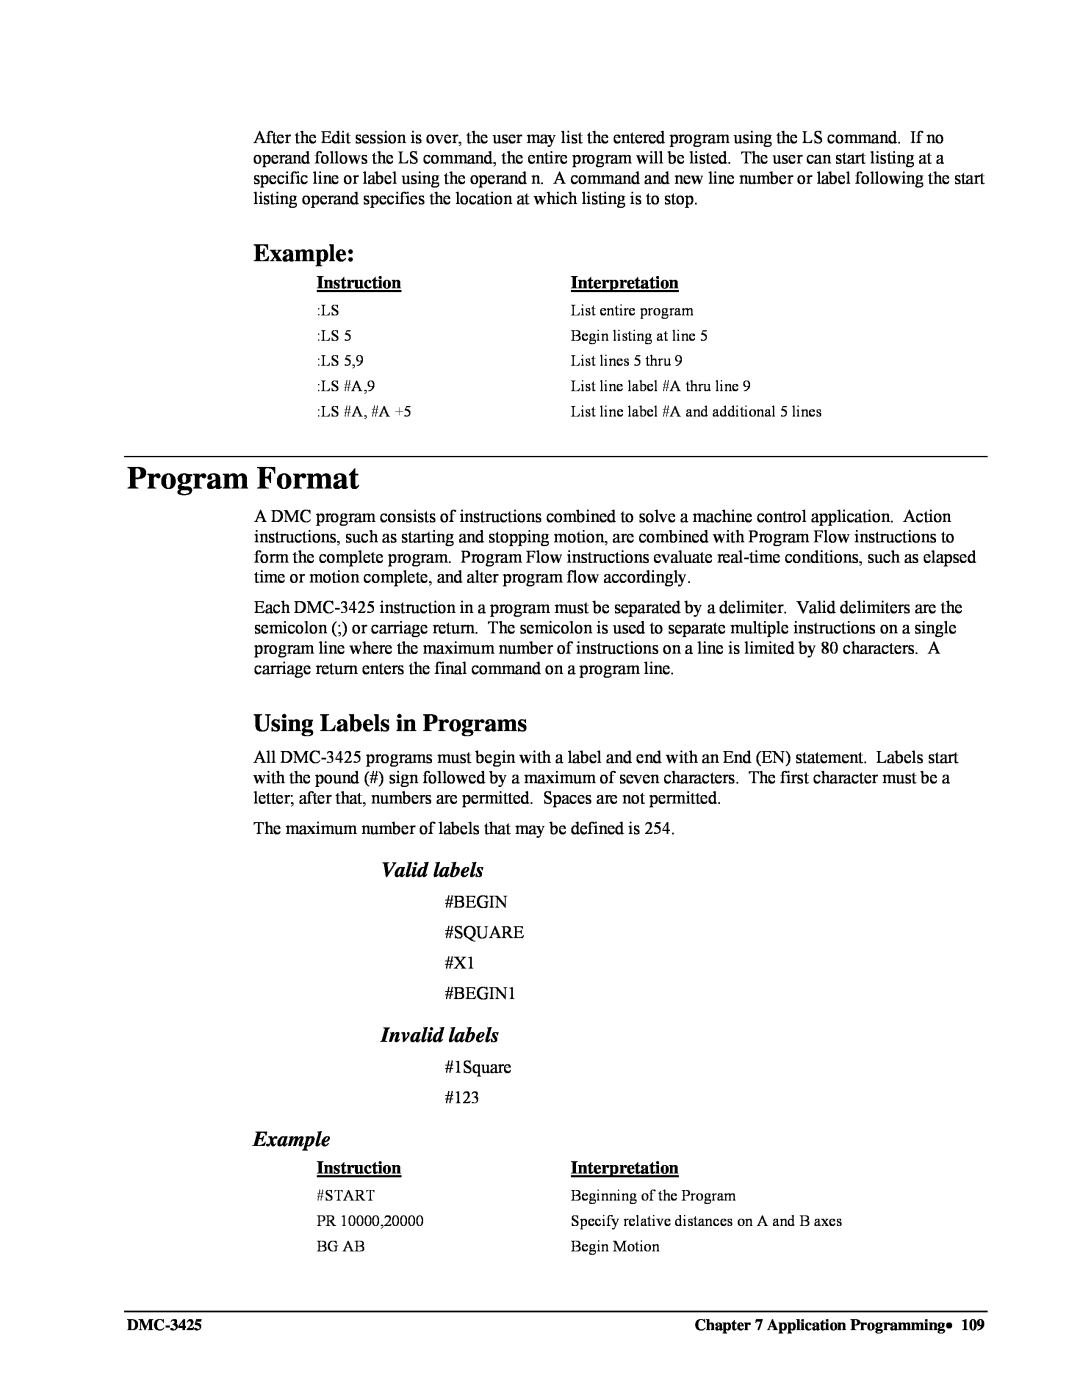 Galil DMC-3425 user manual Program Format, Using Labels in Programs, Valid labels, Invalid labels, Example 